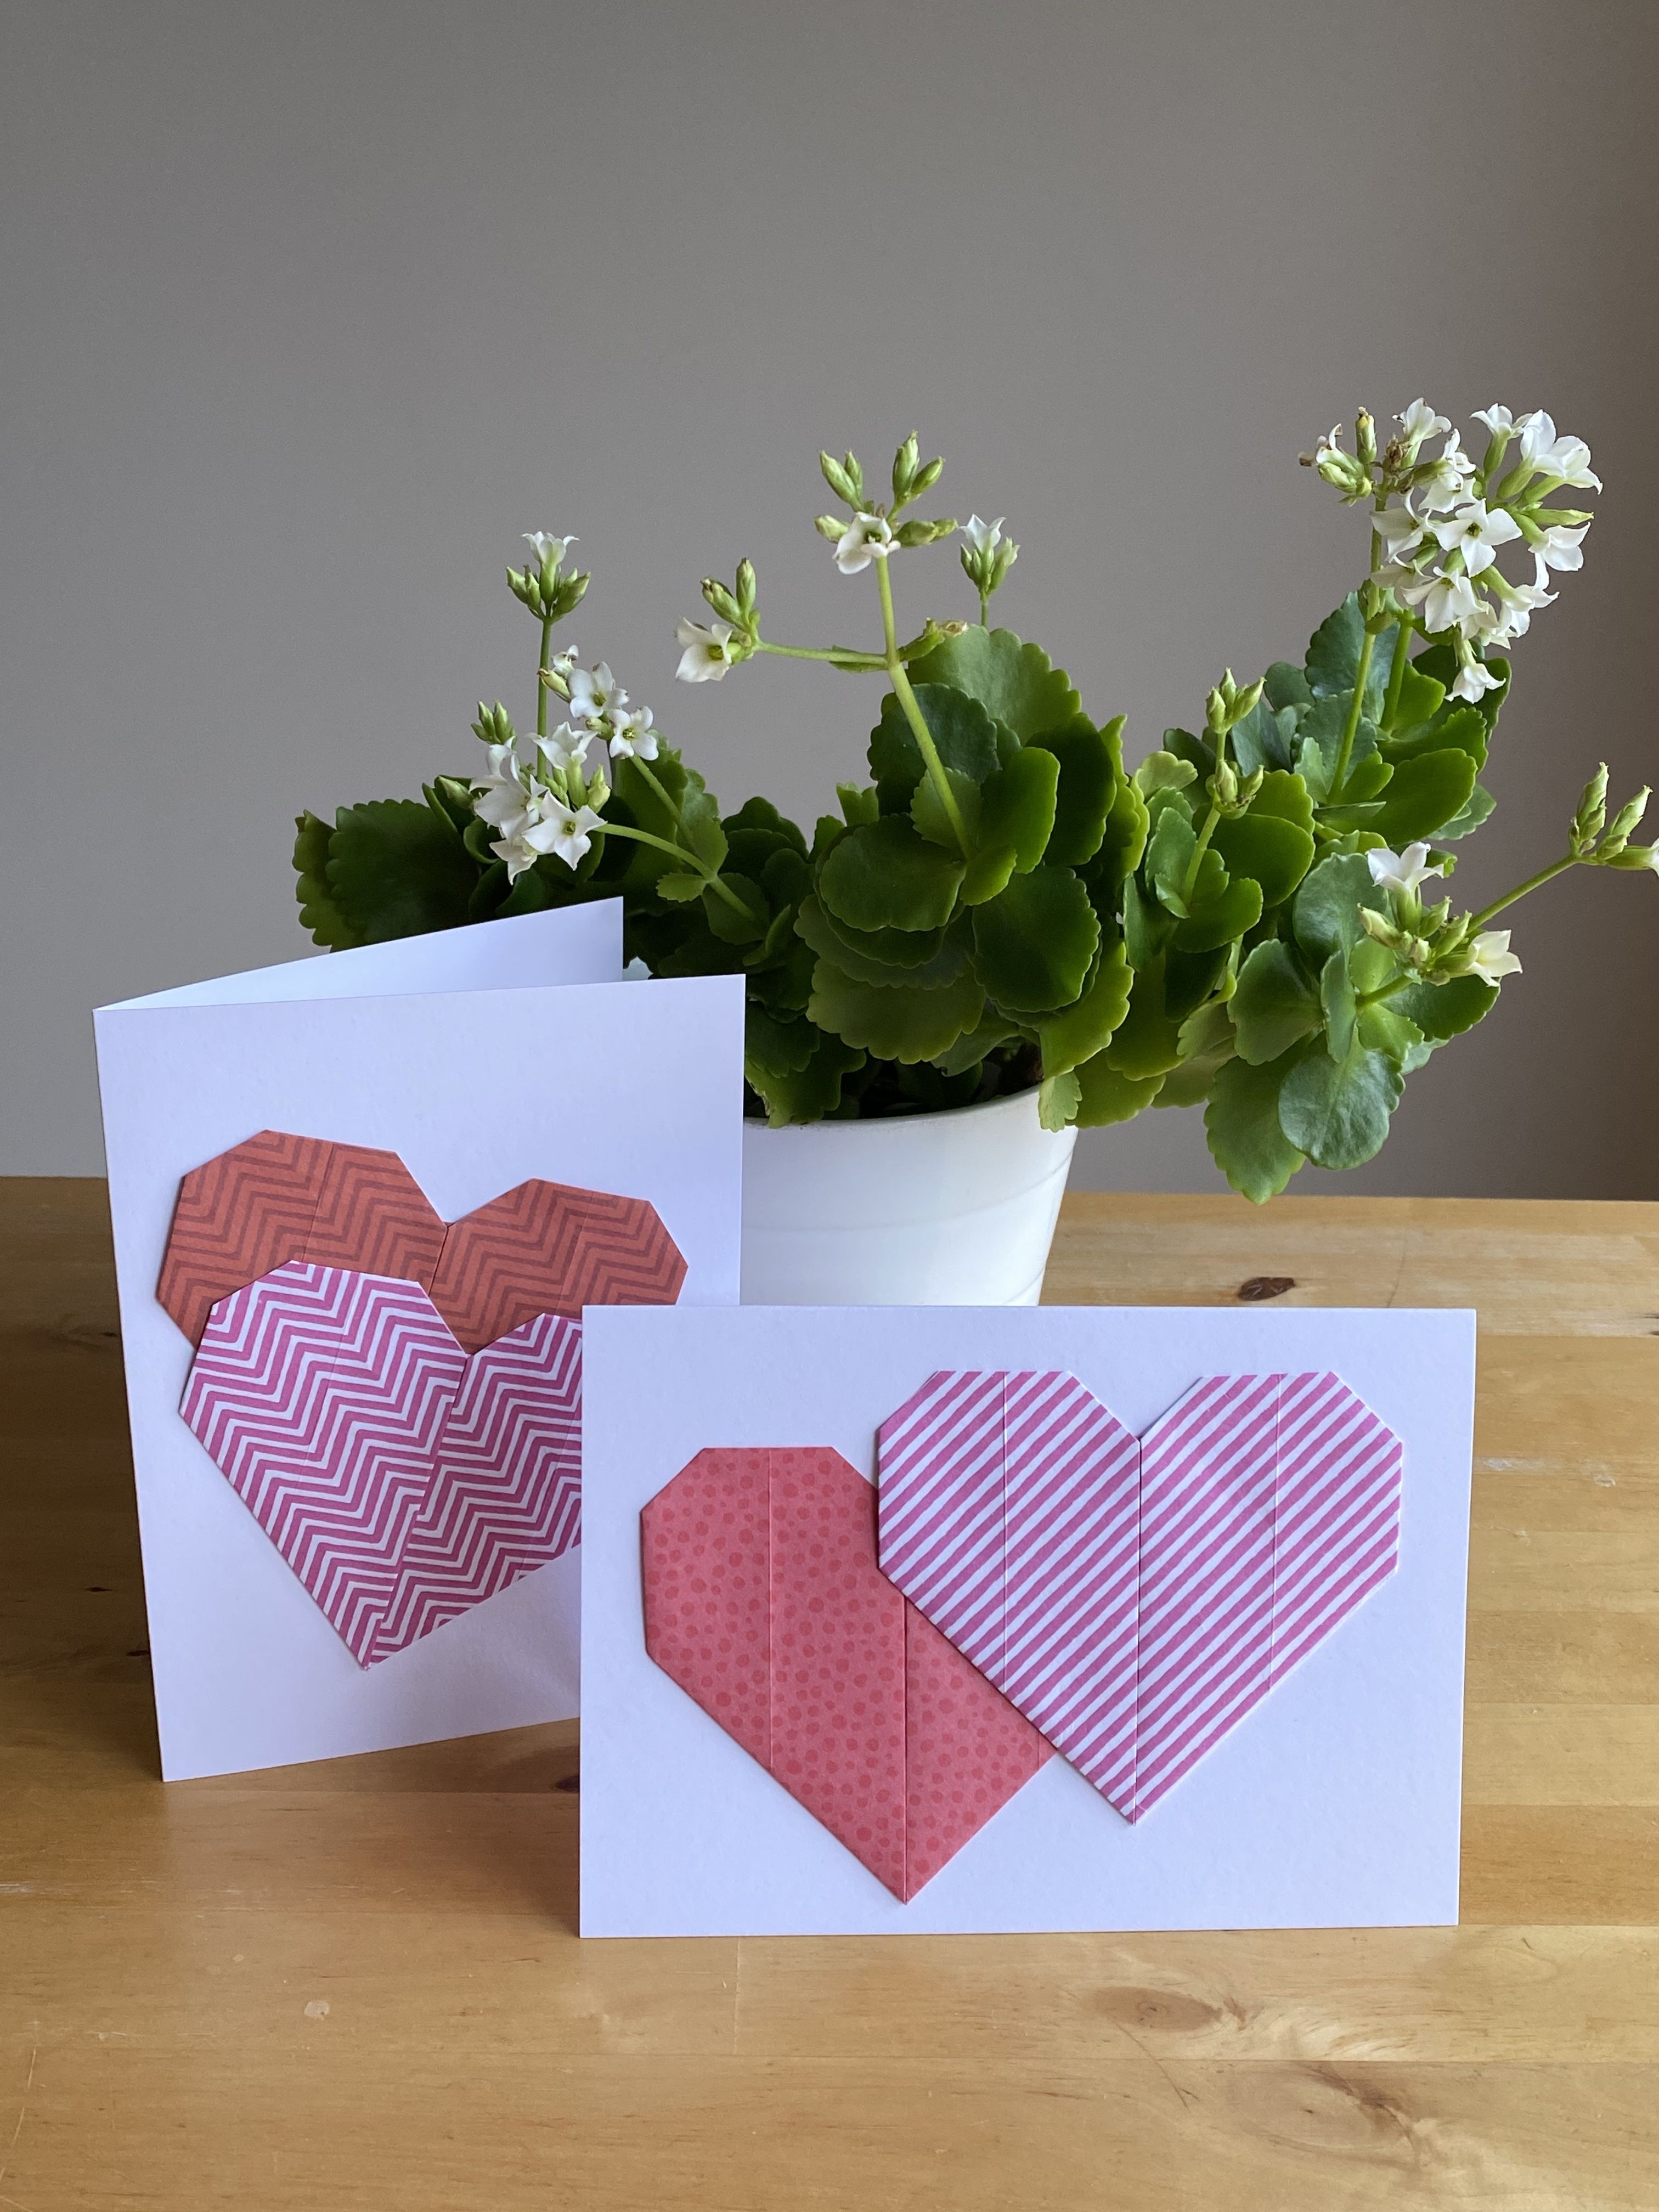 Handmade Origami Valentine Cards - Heart Cards - Greeting Cards - Valentine Cards - Assortment of Valentine Origami Cards